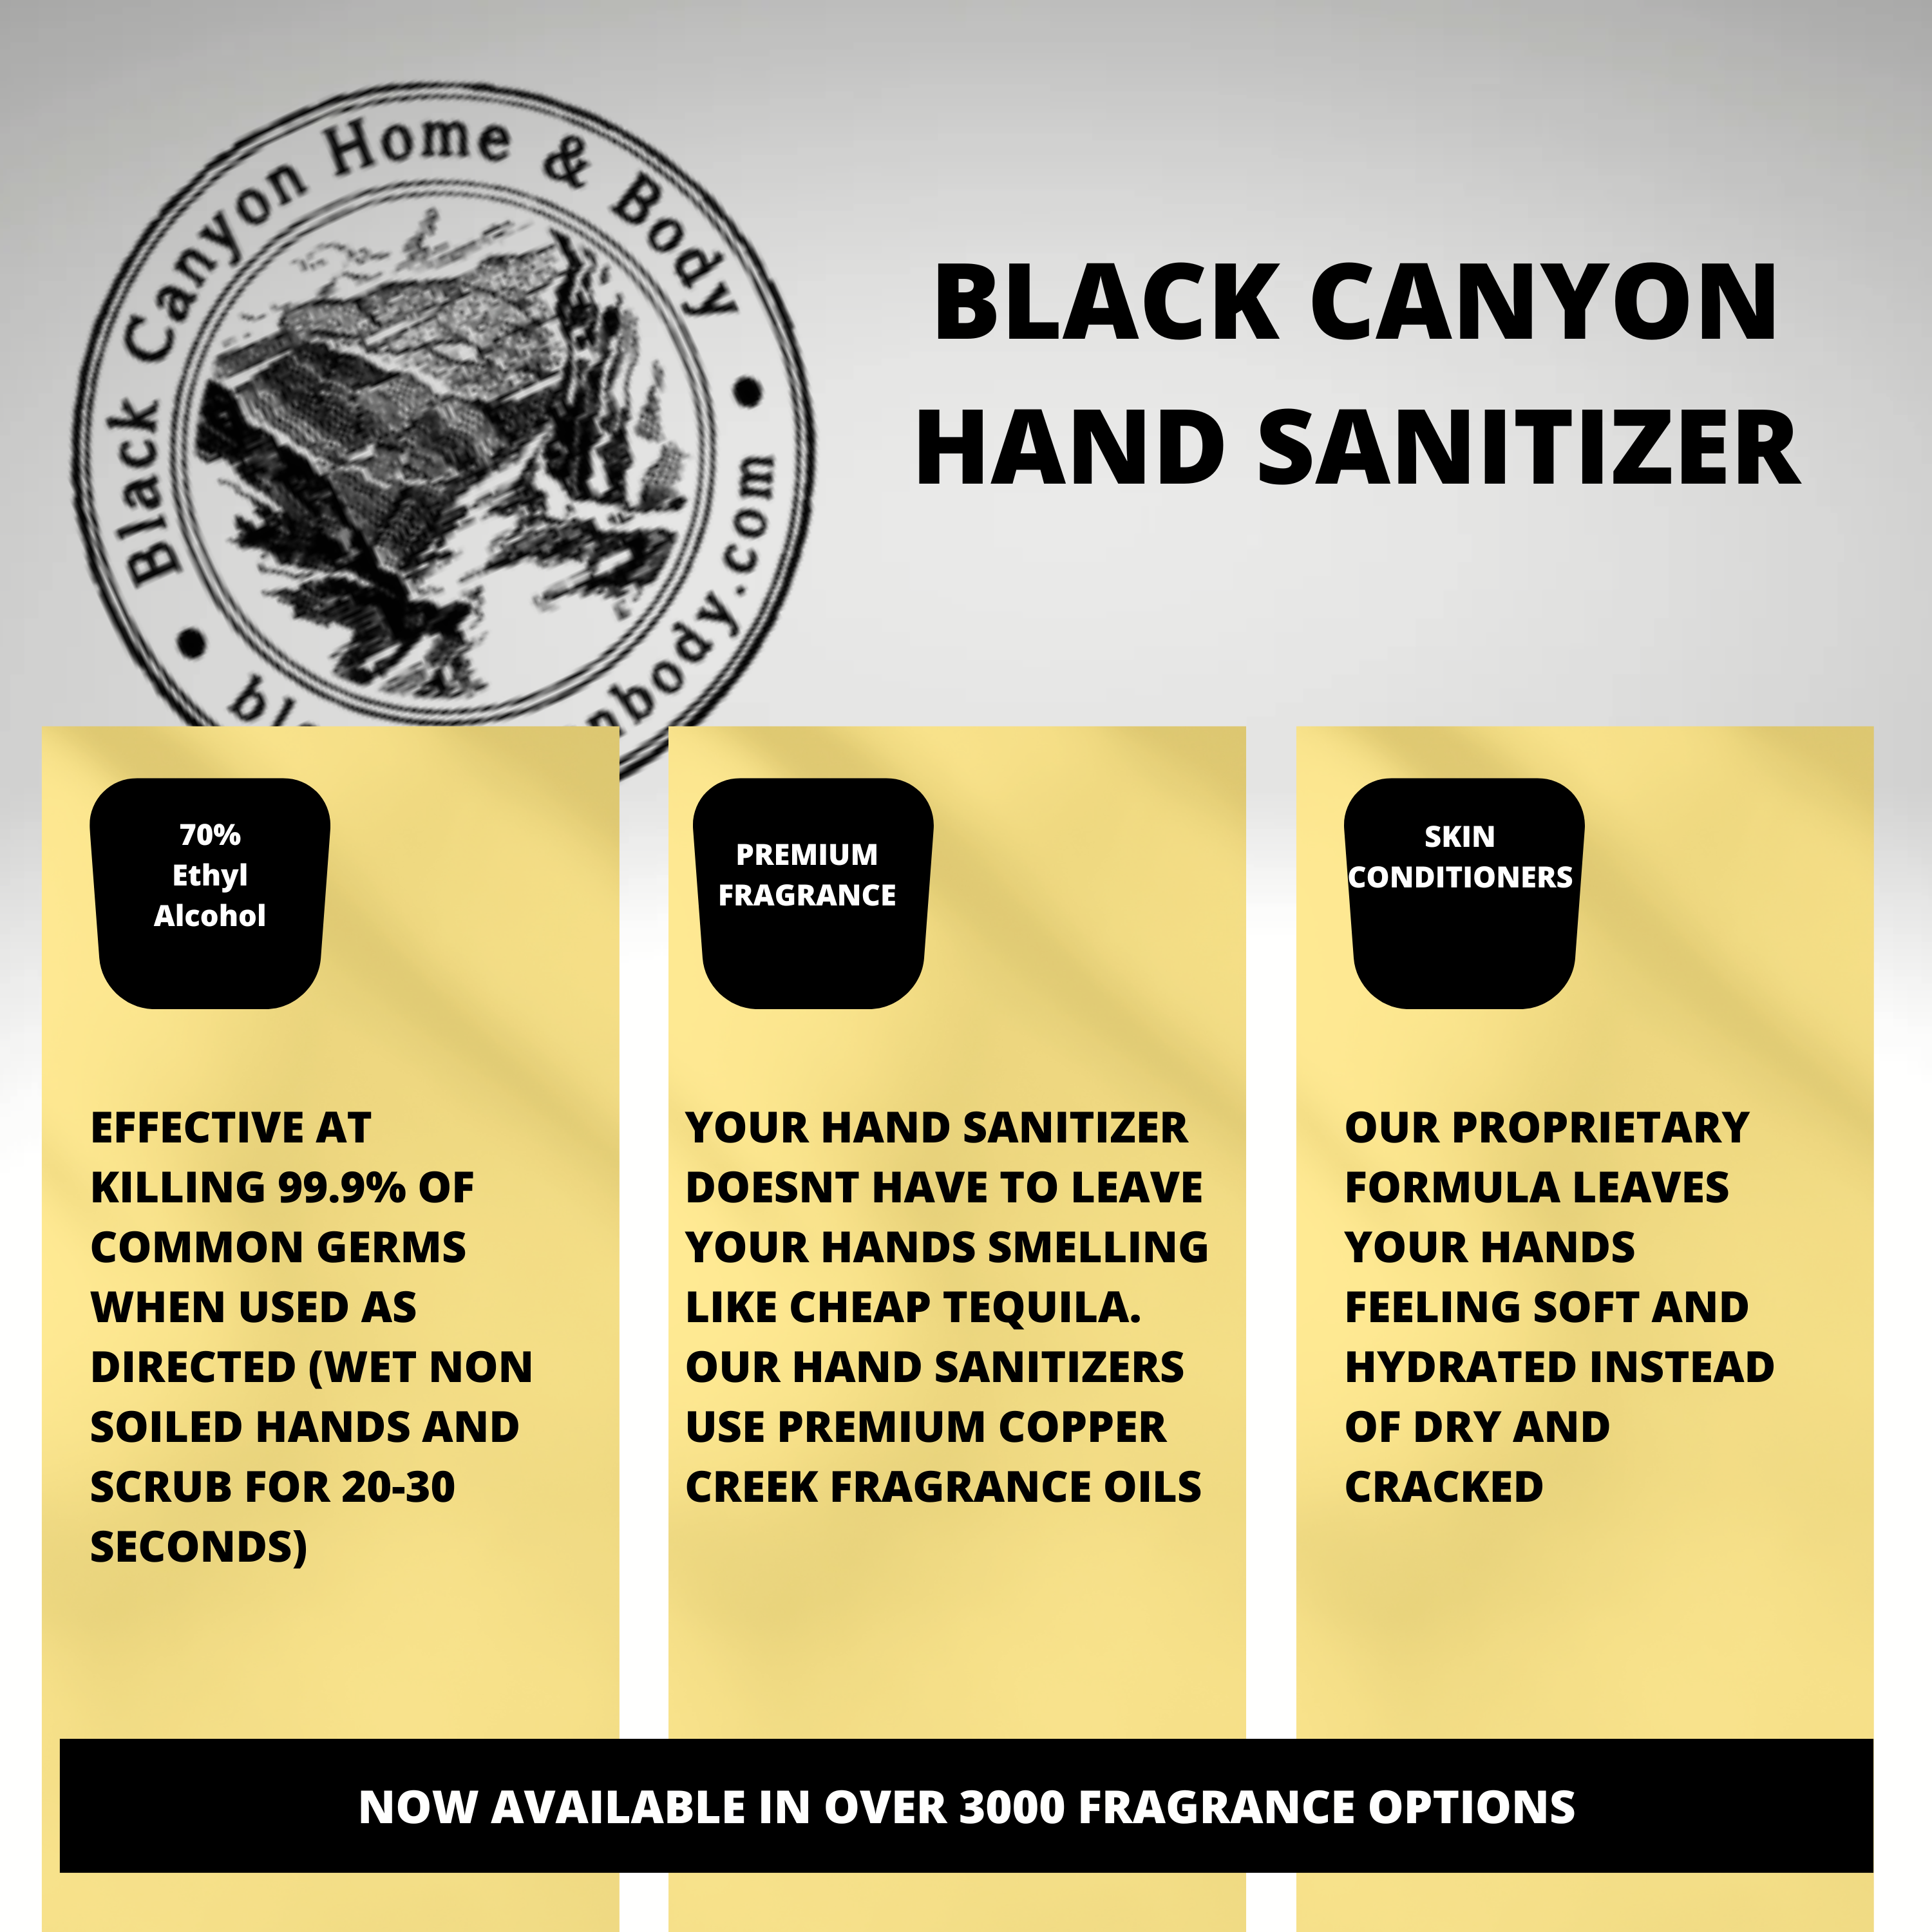 Black Canyon Bartlett Pear & Brandy Scented Hand Sanitizer Gel